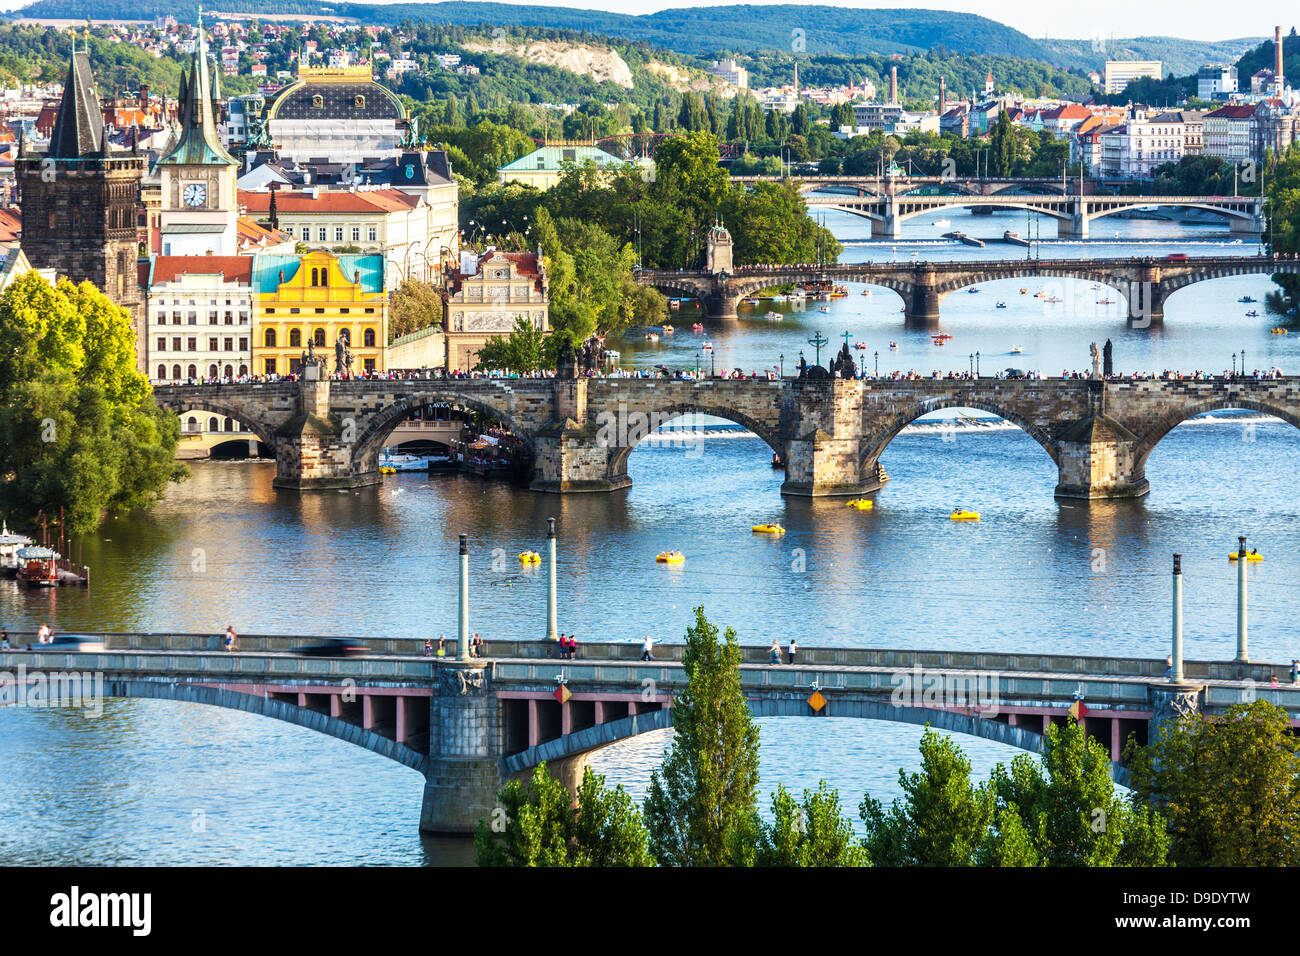 View of Prague and bridges over river Vltava (Moldau) Czech Republic. Famous Charles Bridge is second from bottom. Stock Photo